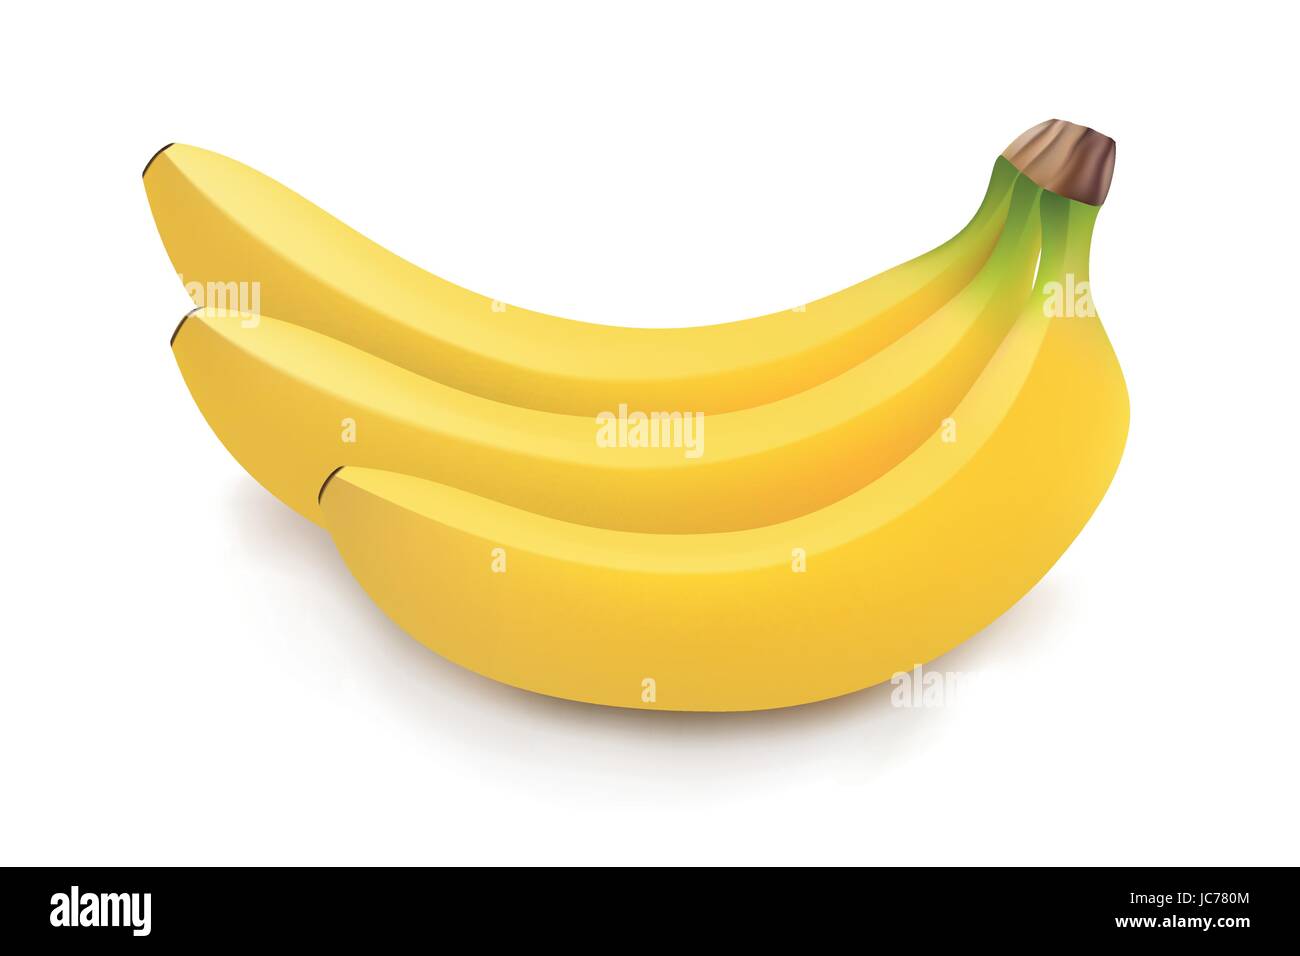 Realistic illustration of bunch of bananas isolated on white background, banana icon, banana image, vector illustration Stock Vector